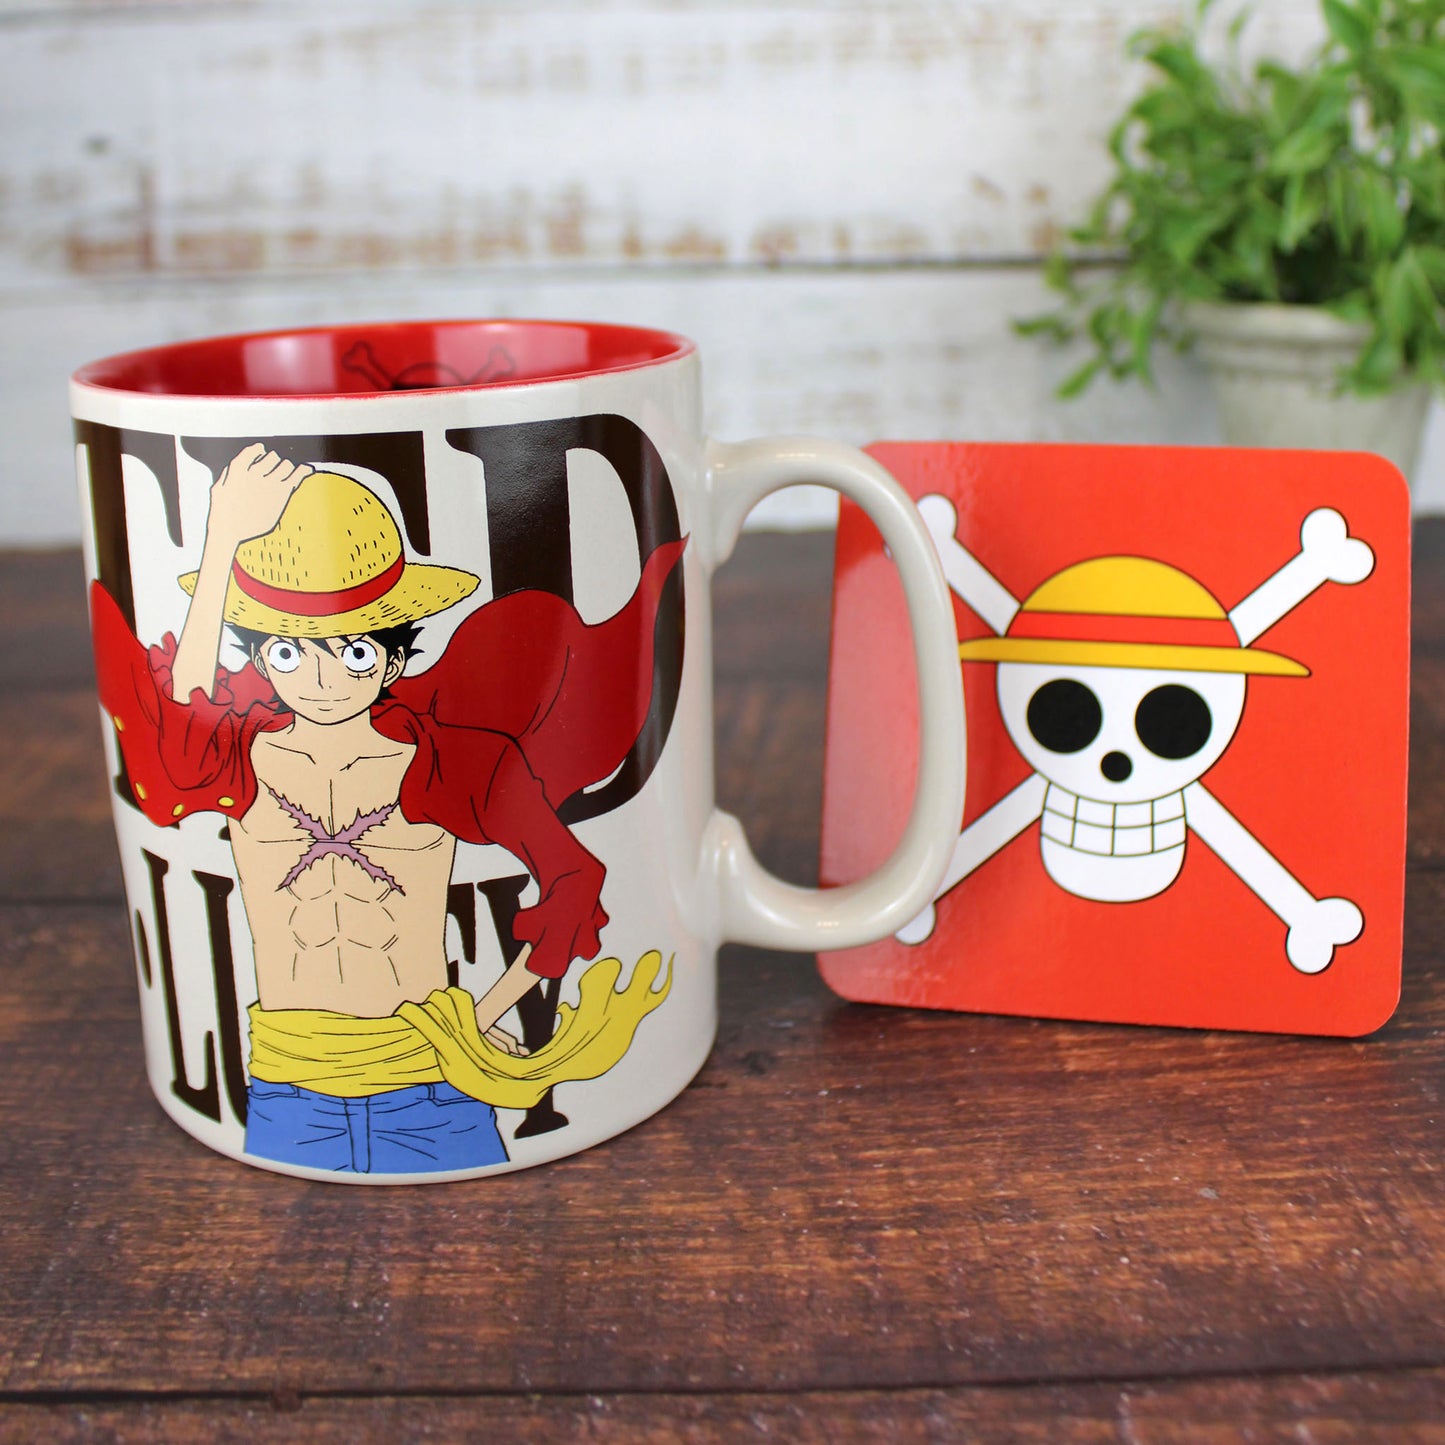 One Piece Monkey D. Luffy Ceramic Mug Black/Red (One Size)